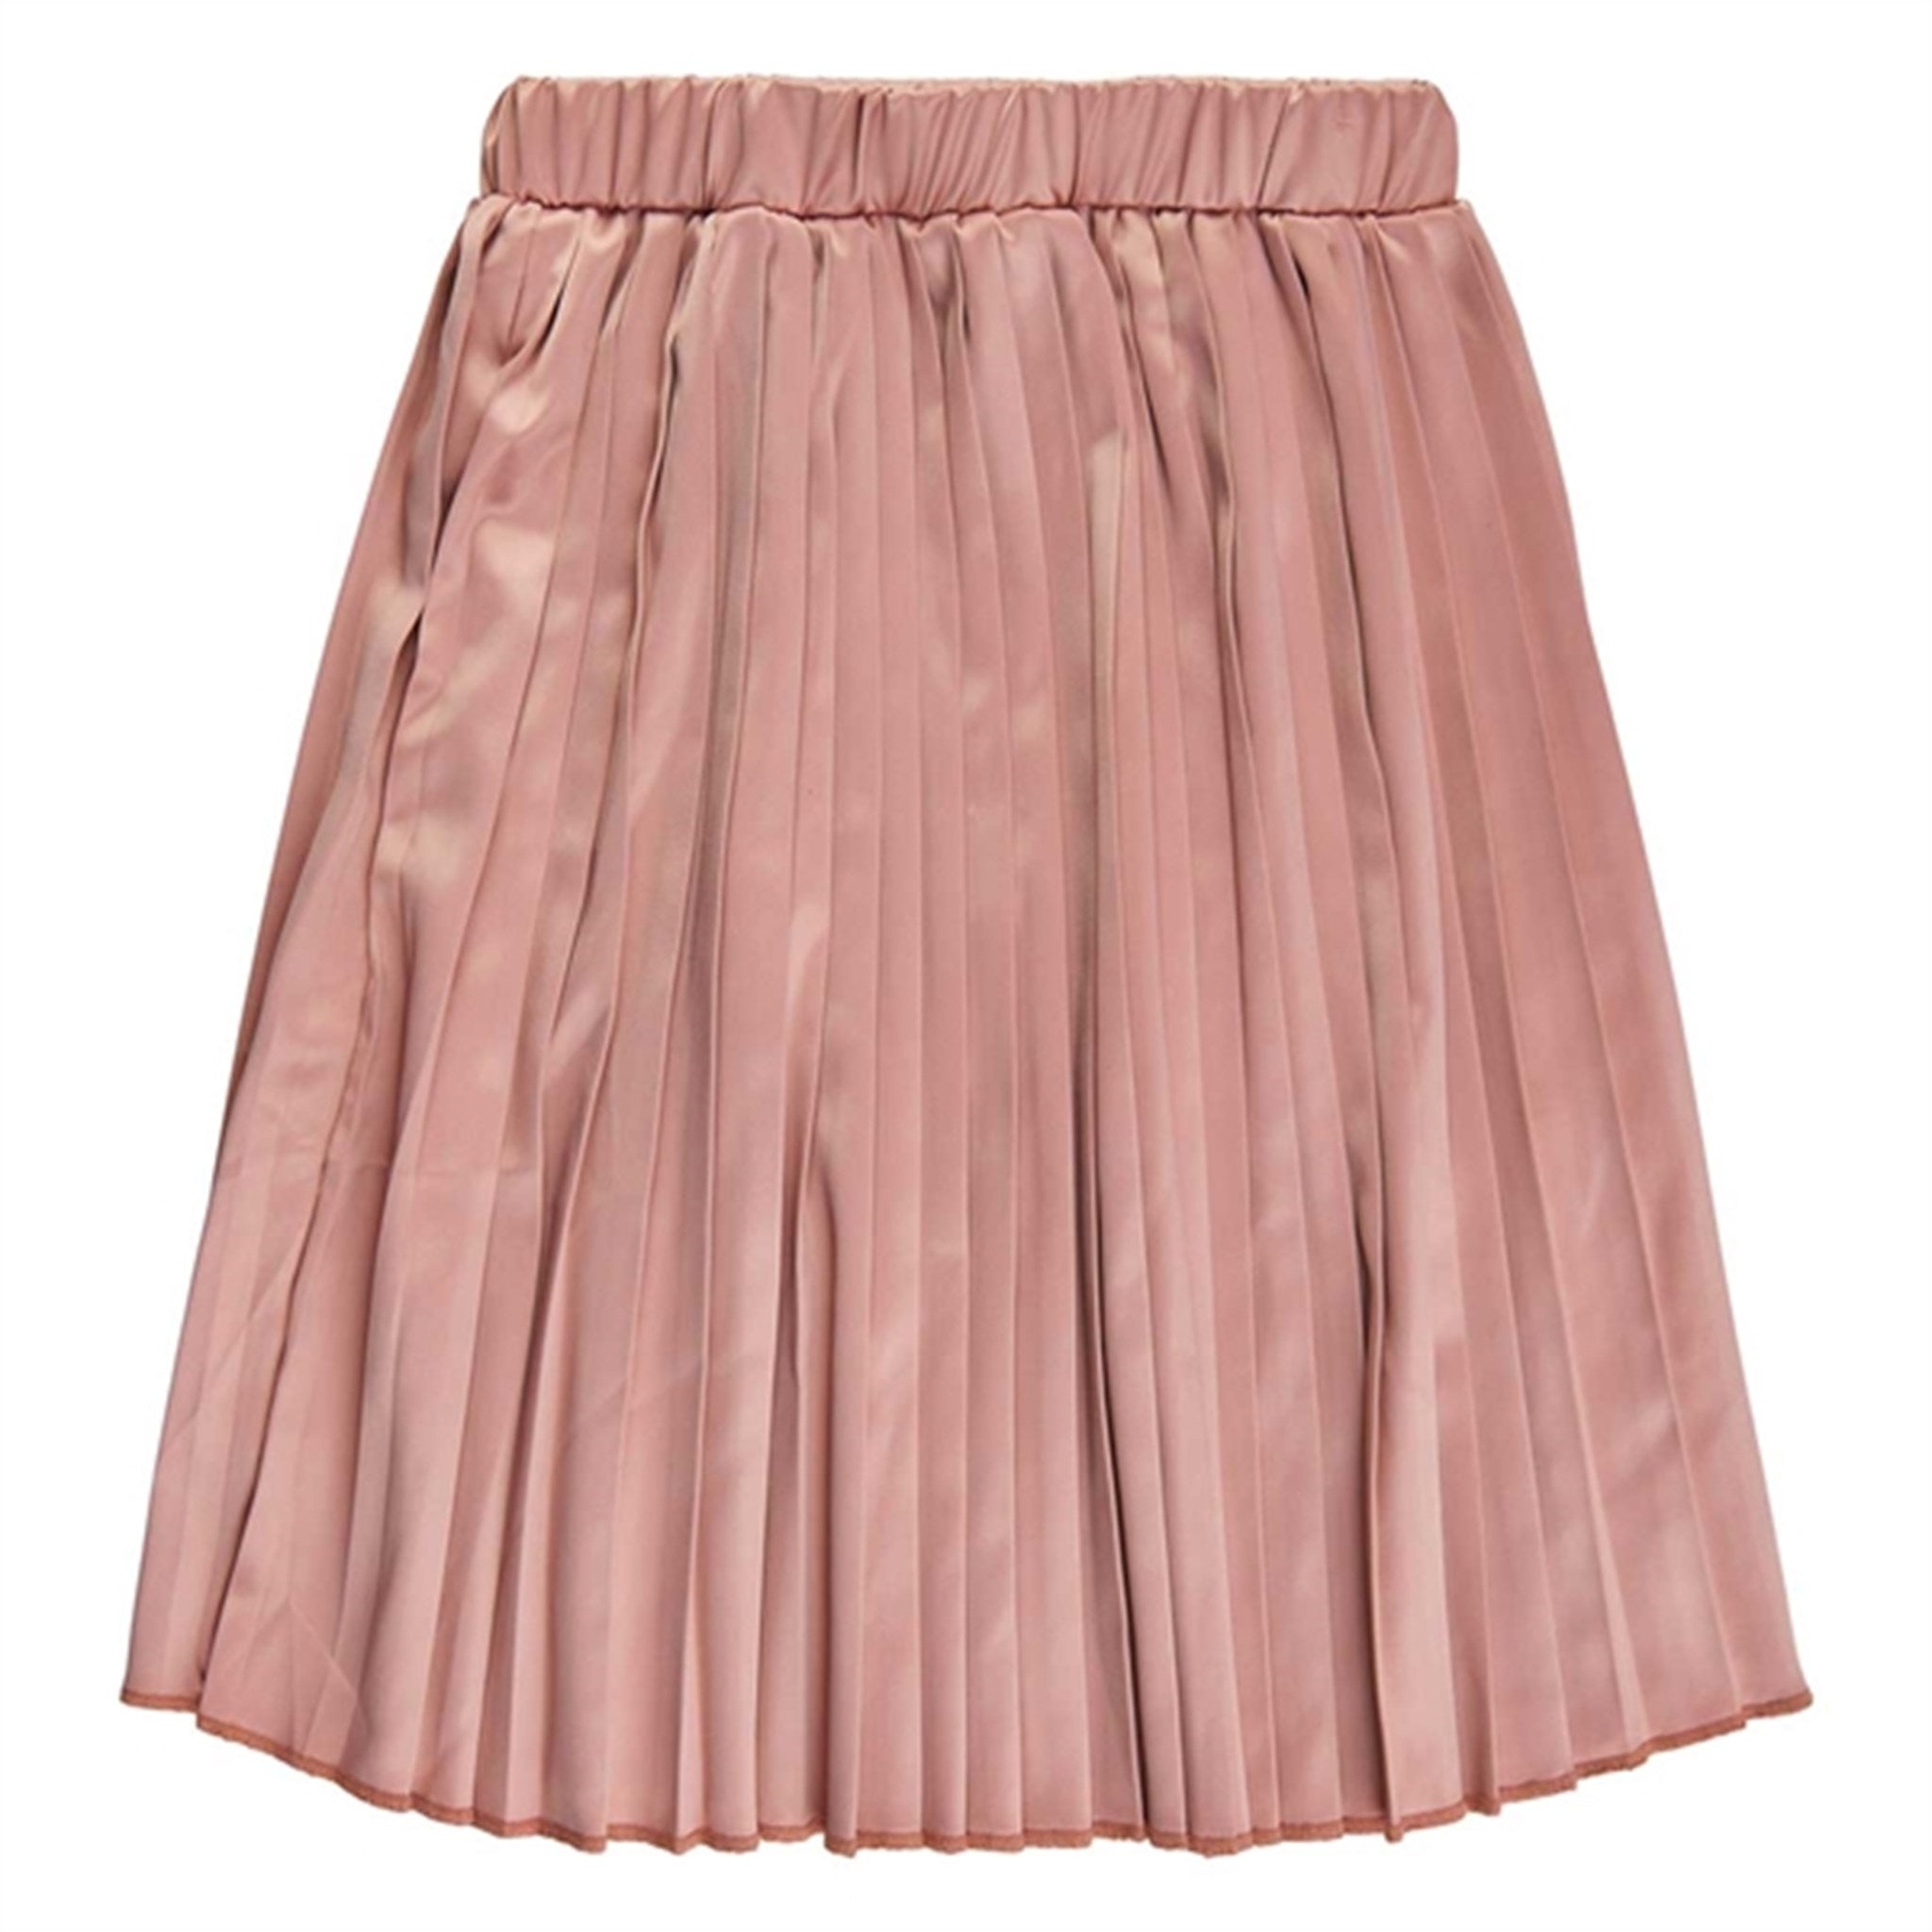 The New Lilas Backi Pleat Skirt